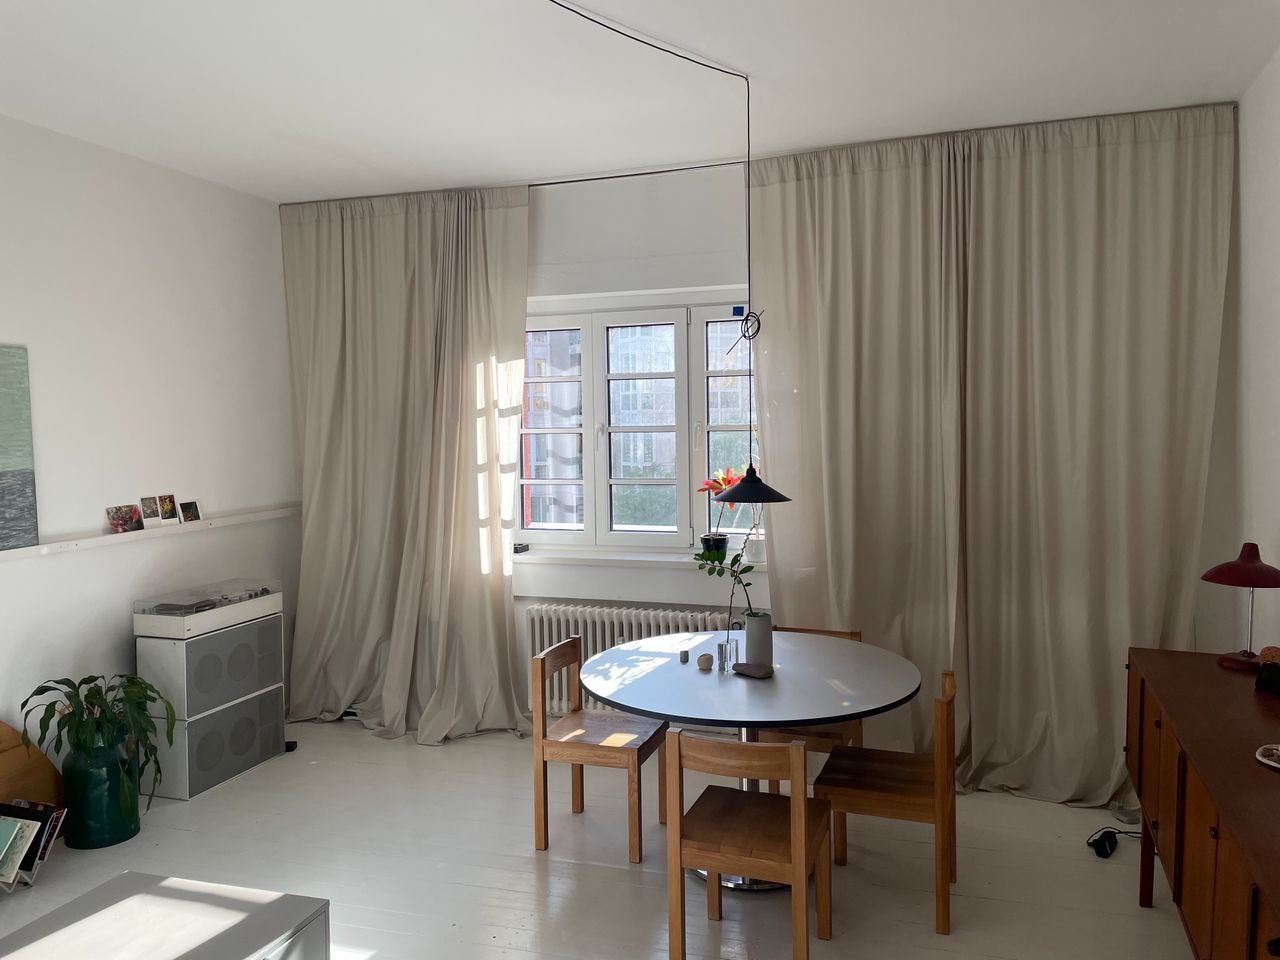 2 Room Apartment Studio in the Heart of Neukölln